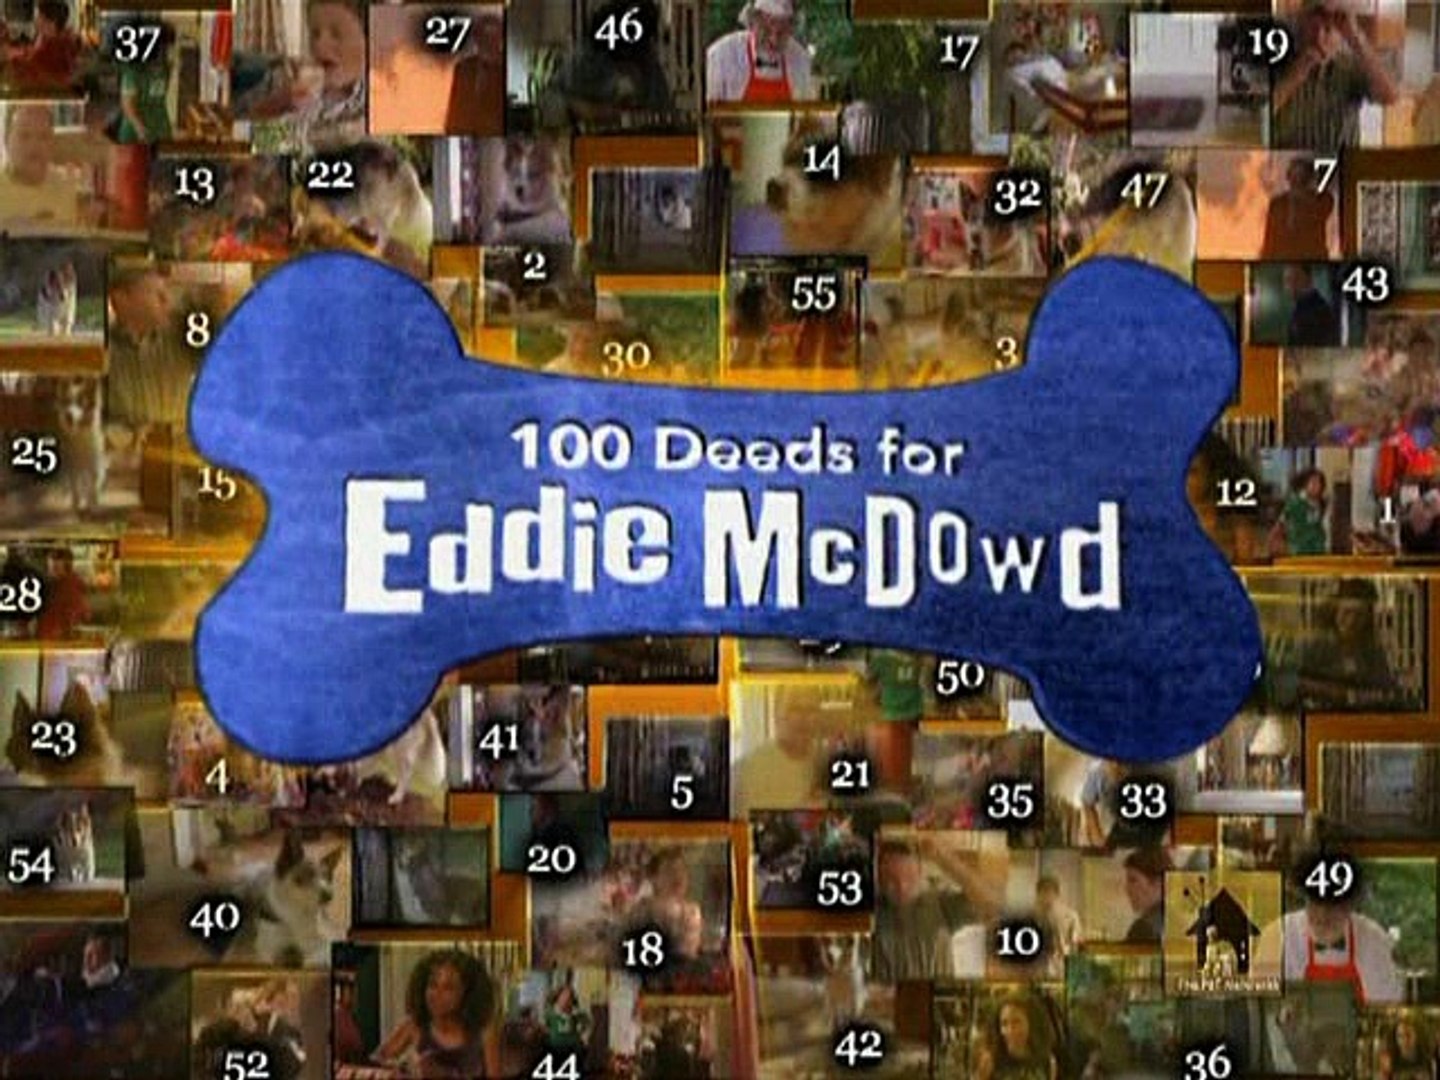 100 Deeds For Eddie McDowd - Season 2 - Episode 5 - A Star is Born